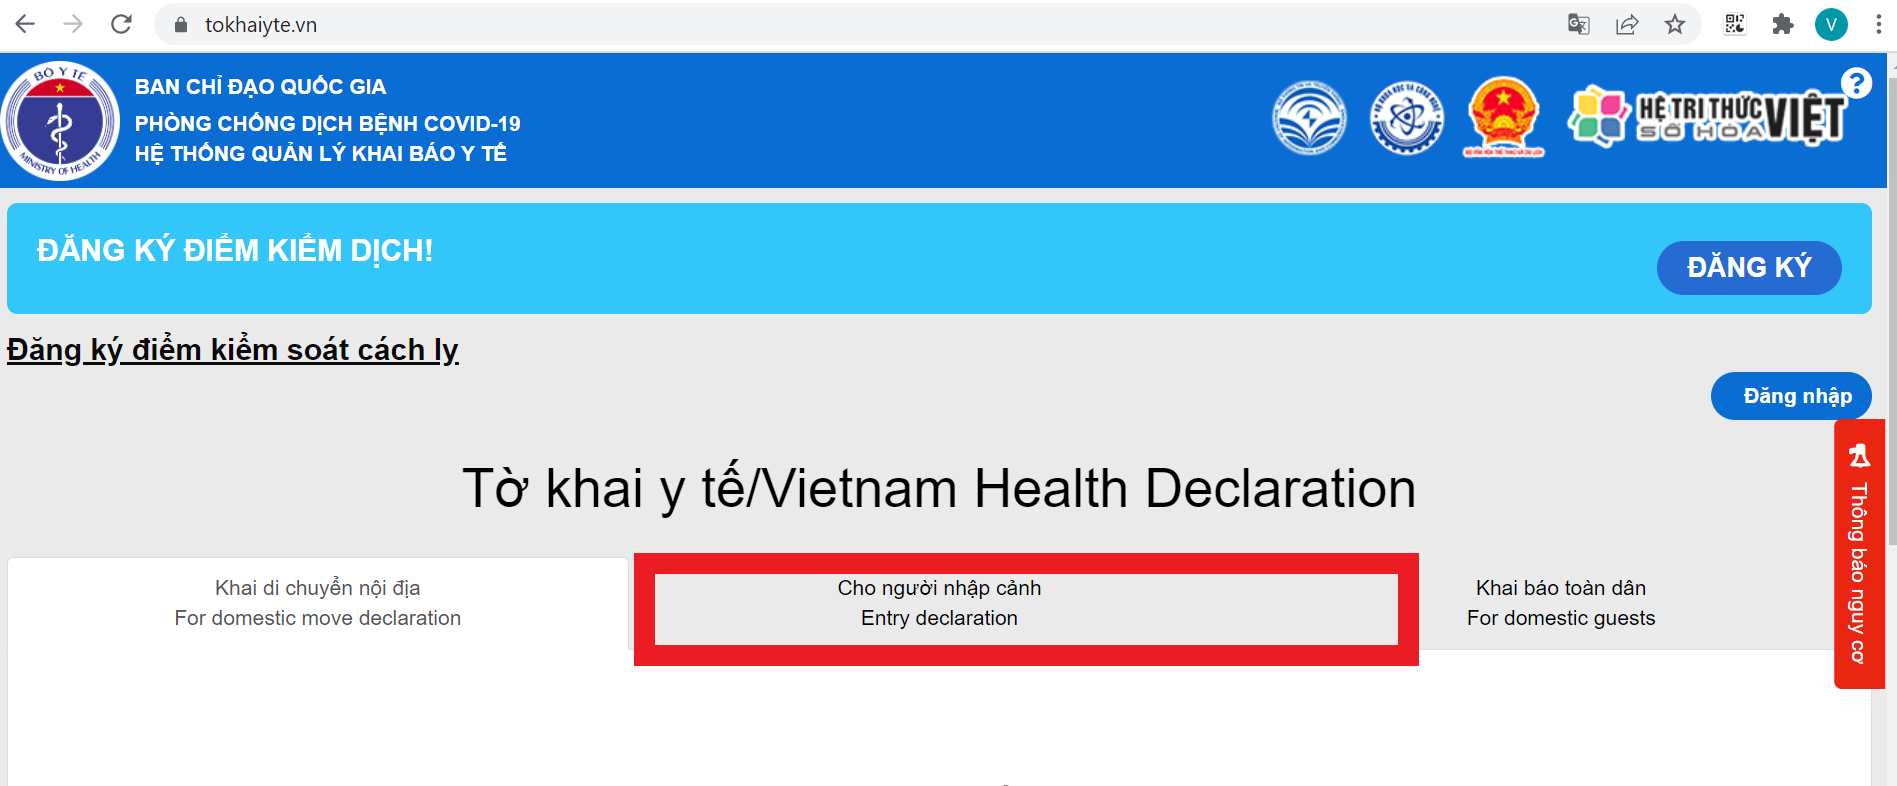 How To Fill Vietnamese Medical Declaration Form? Detailed Guidance On Filling Vietnam Health Declaration